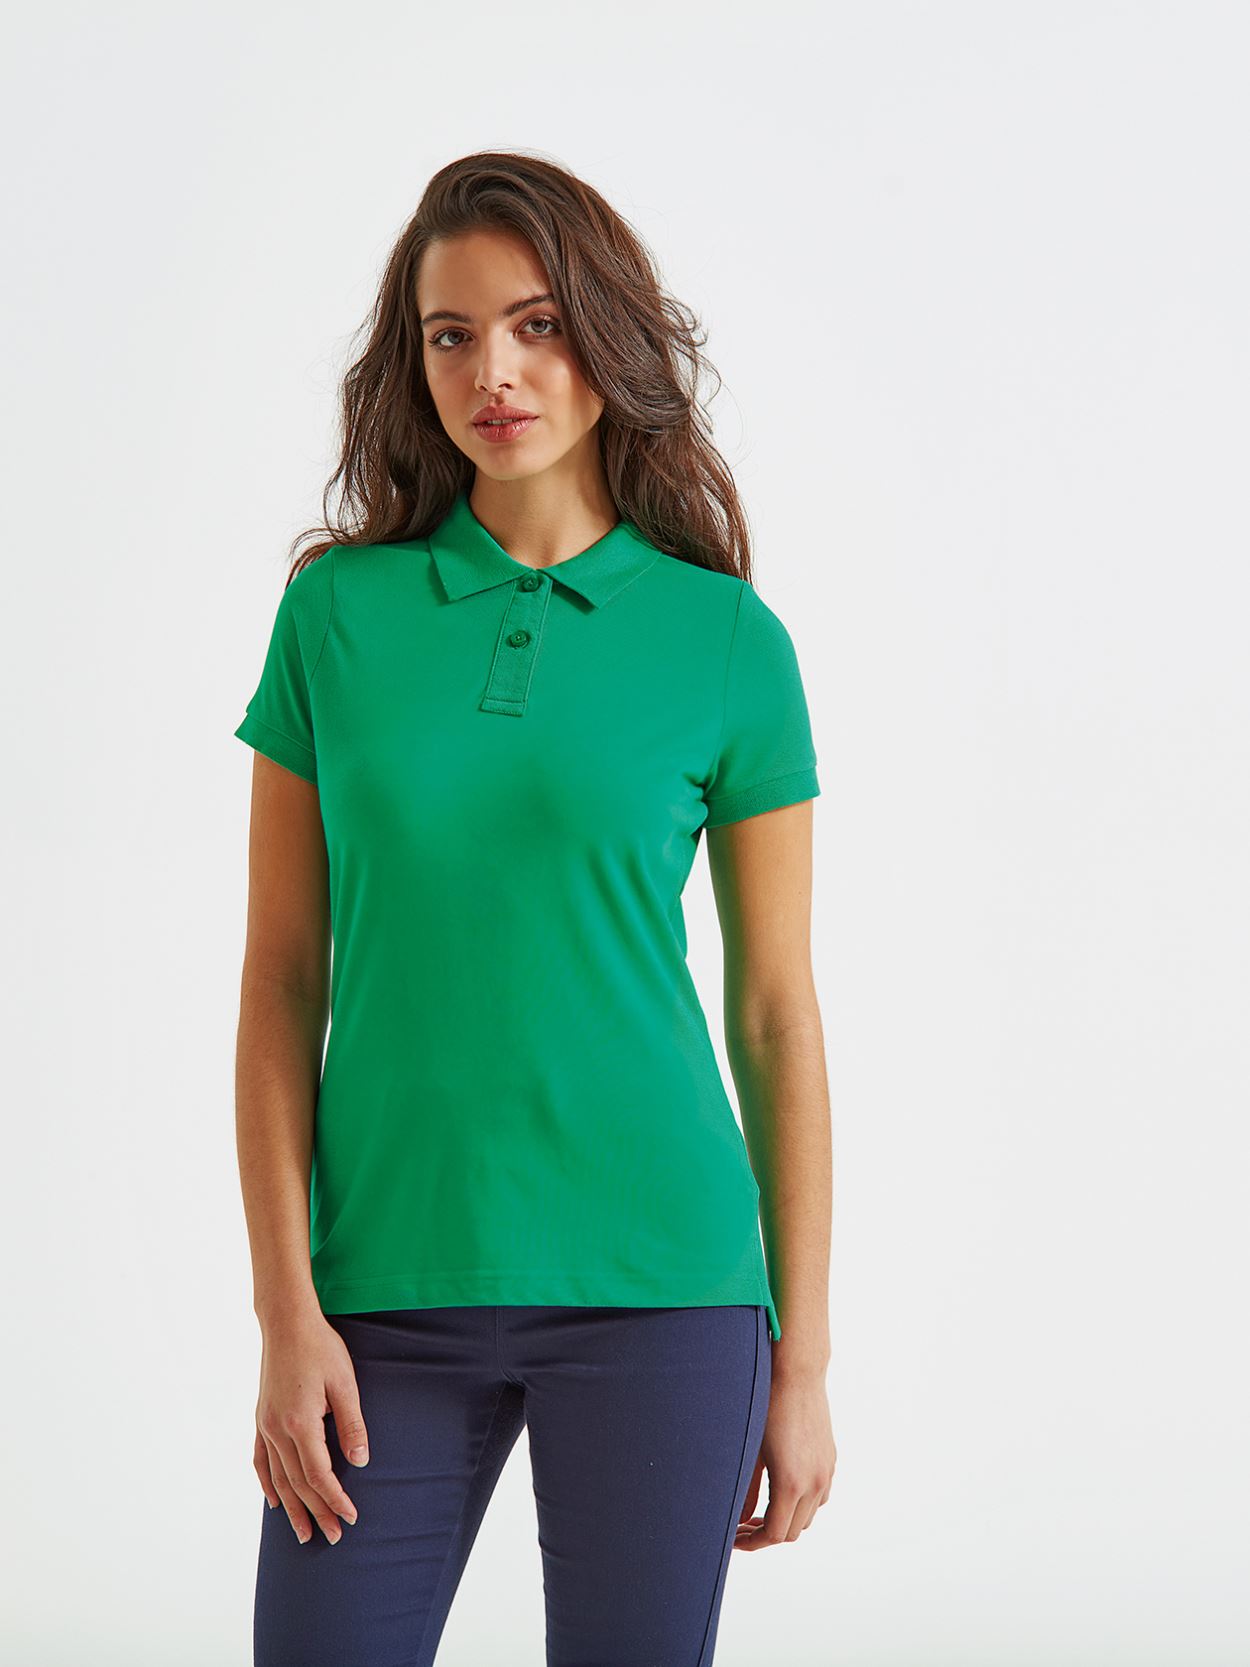 AQ020 Ladies Classic Fit Polo Shirt Image 4